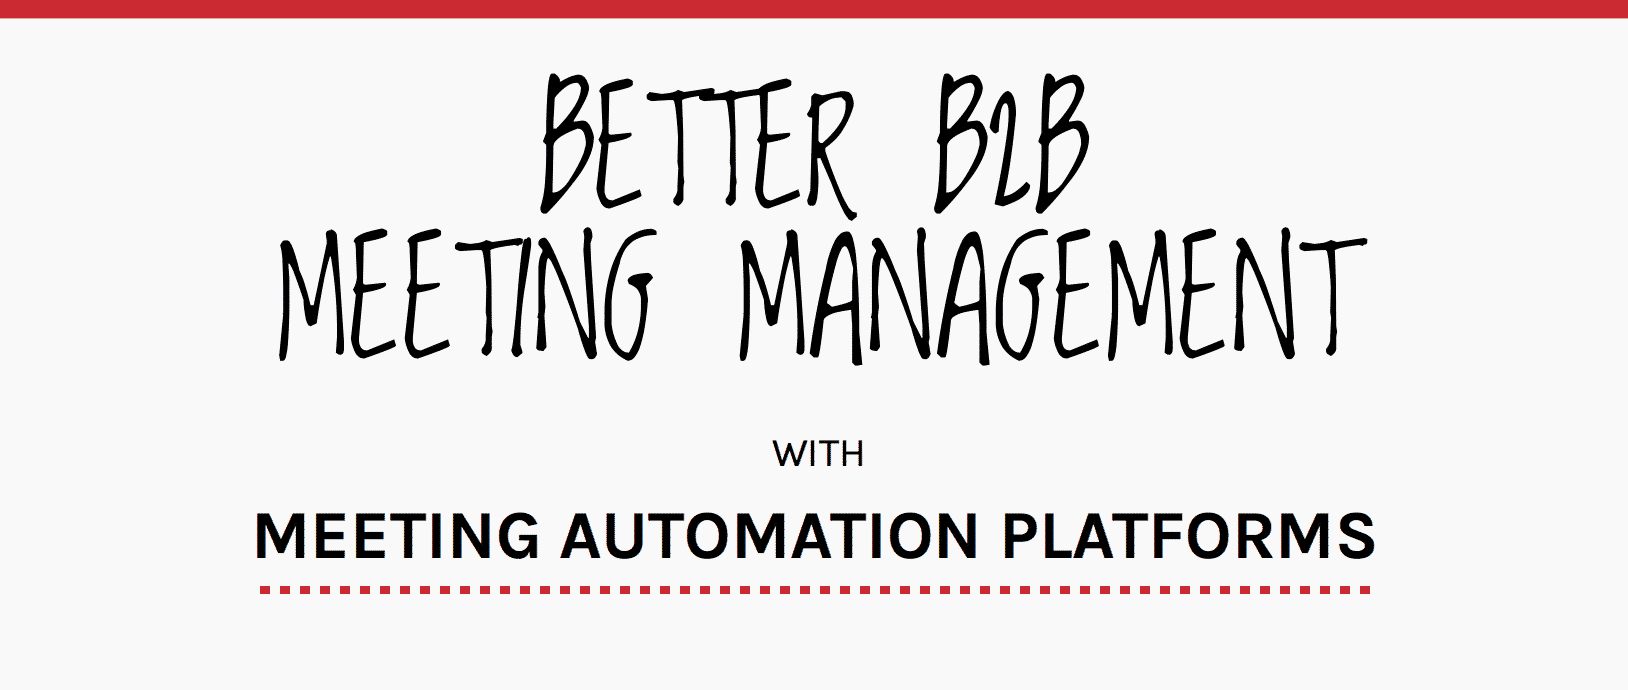 b2b meeting automation platform infographic preview 1 - Meeting Automation Platform